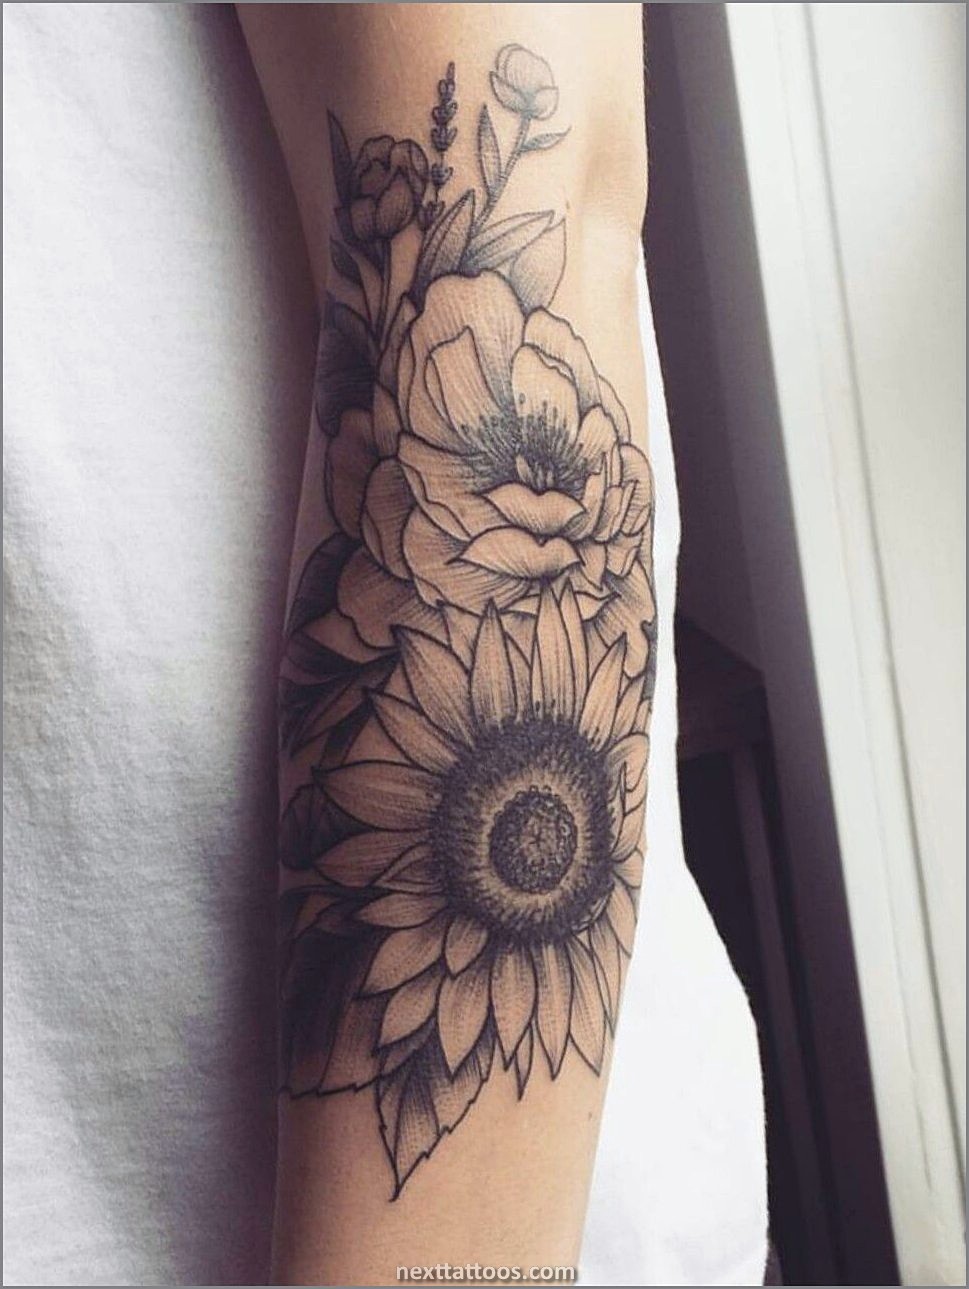 Cute Arm Tattoos For Females